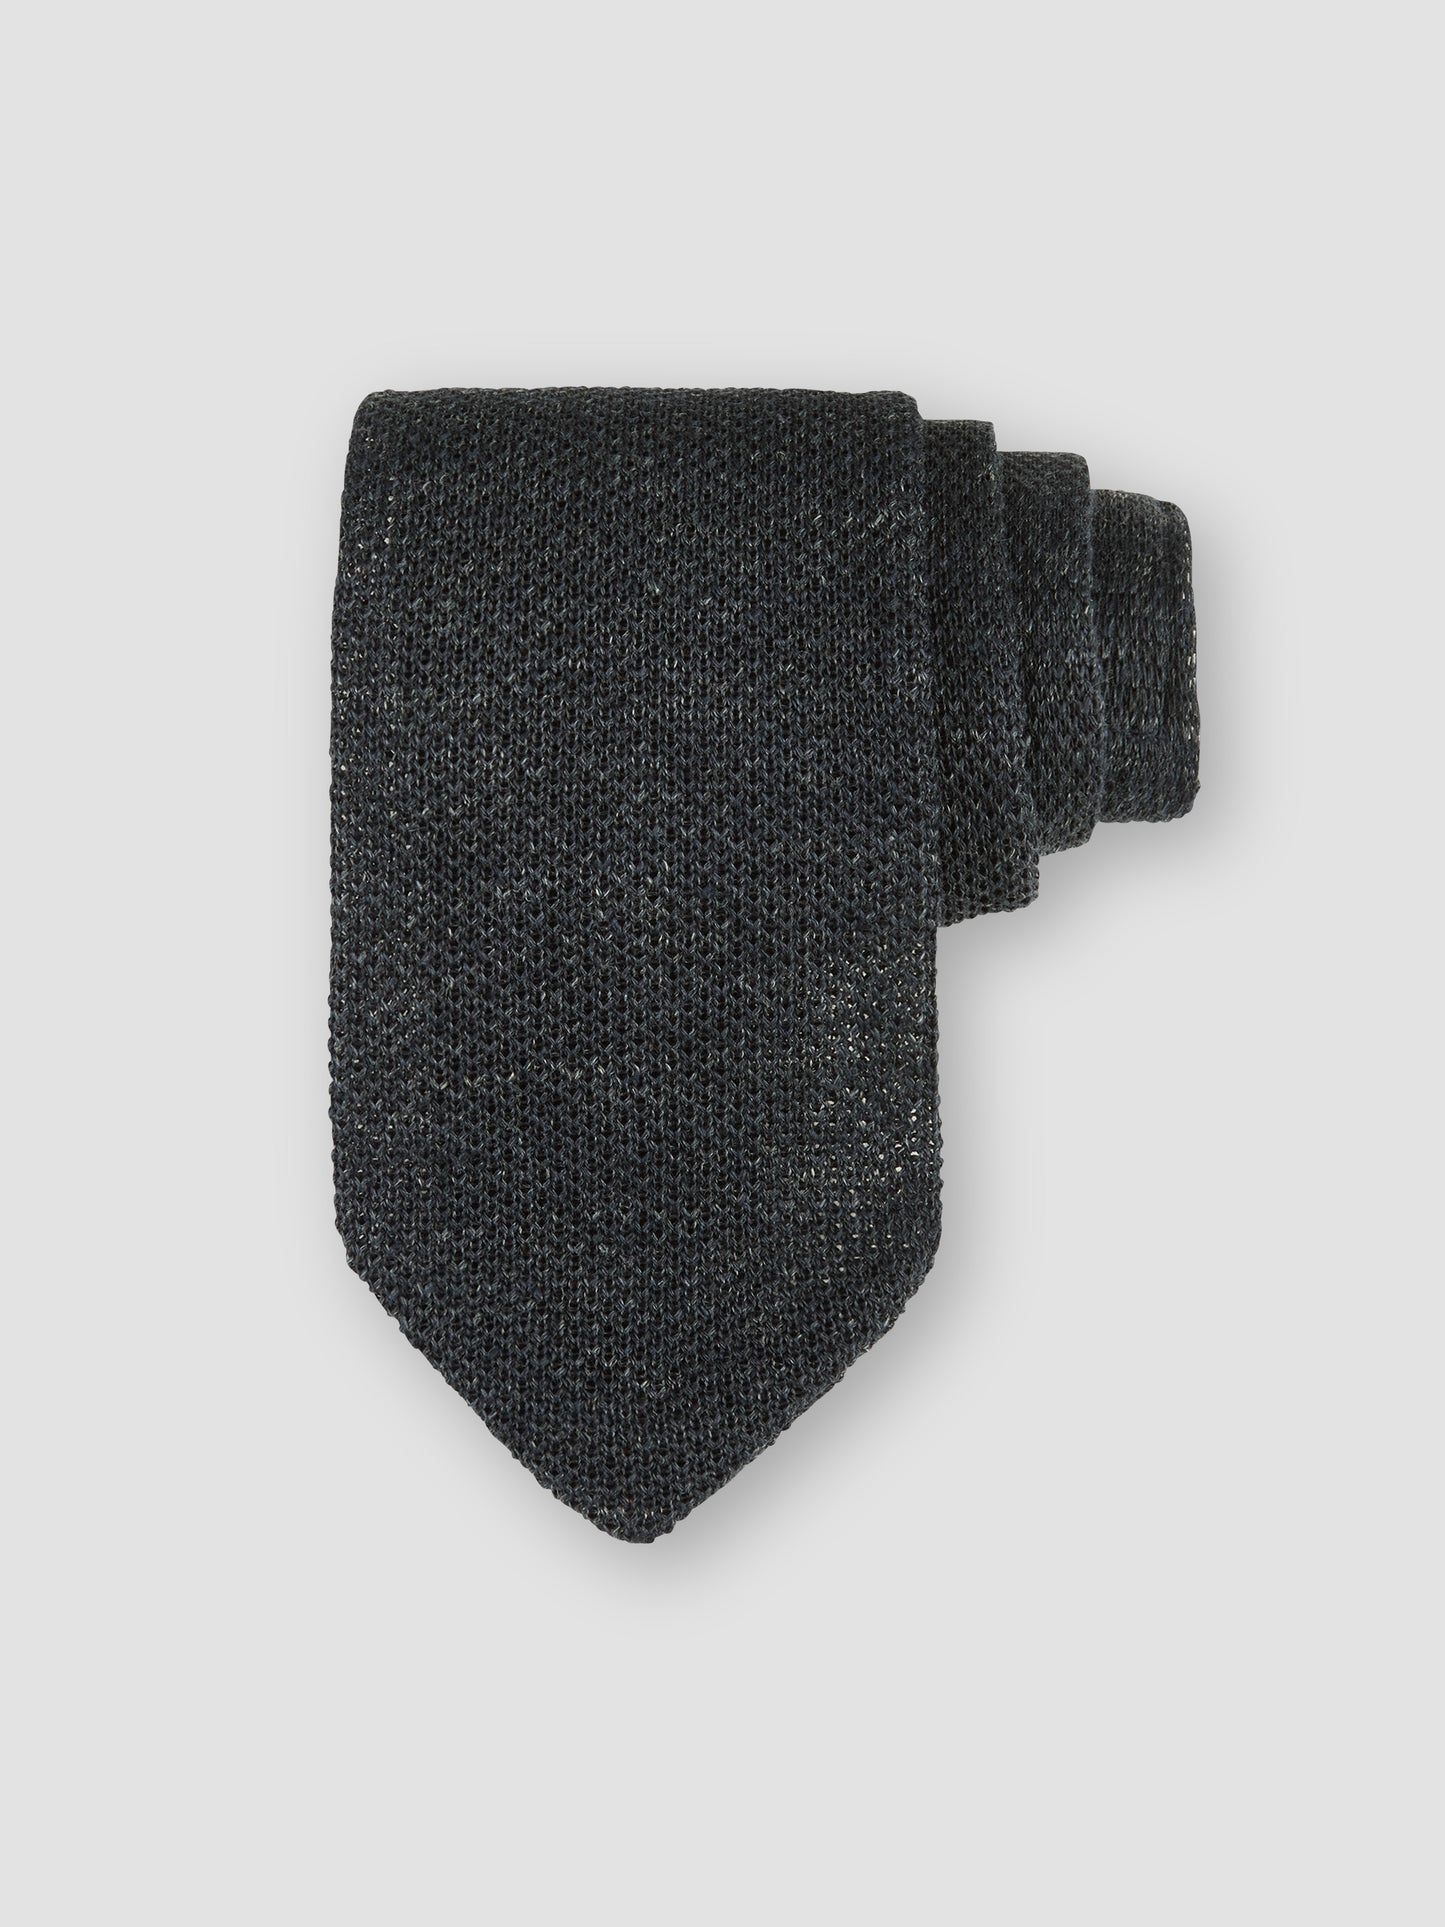 Knitted Linen Tie Darkest Navy Product